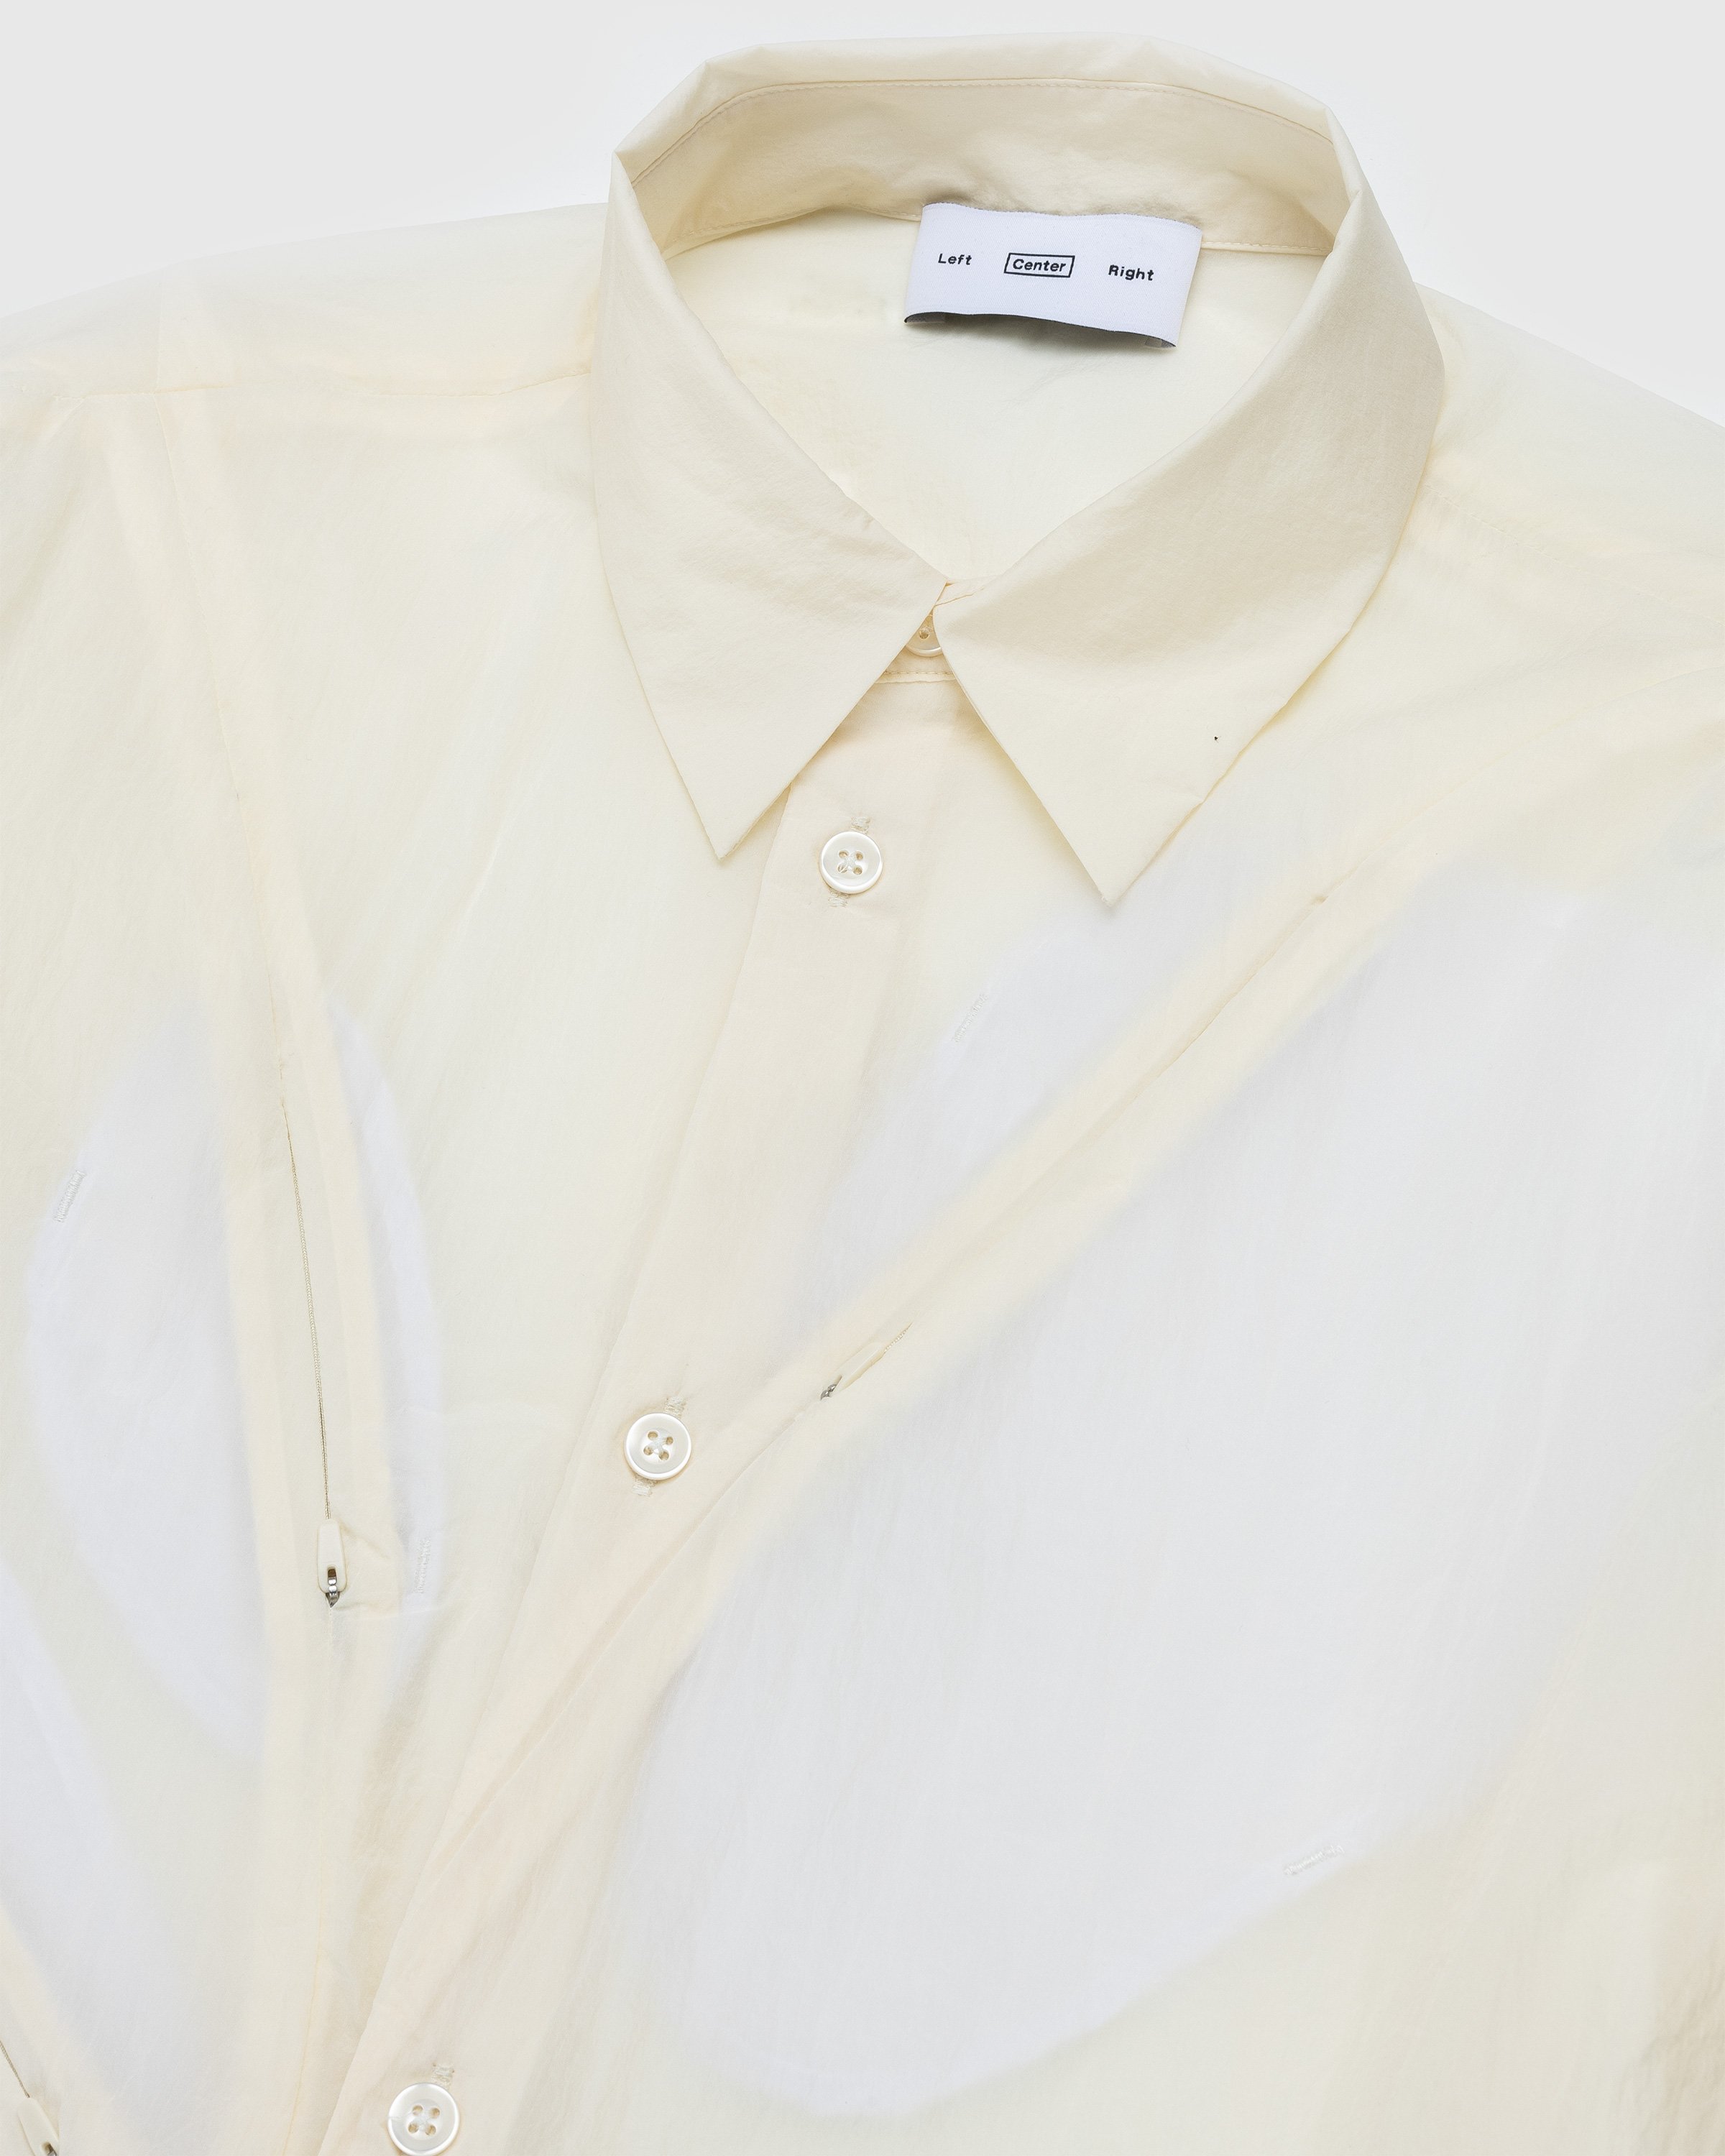 Post Archive Faction (PAF) - 5.0+ Shirt Center Ivory - Clothing - Beige - Image 5